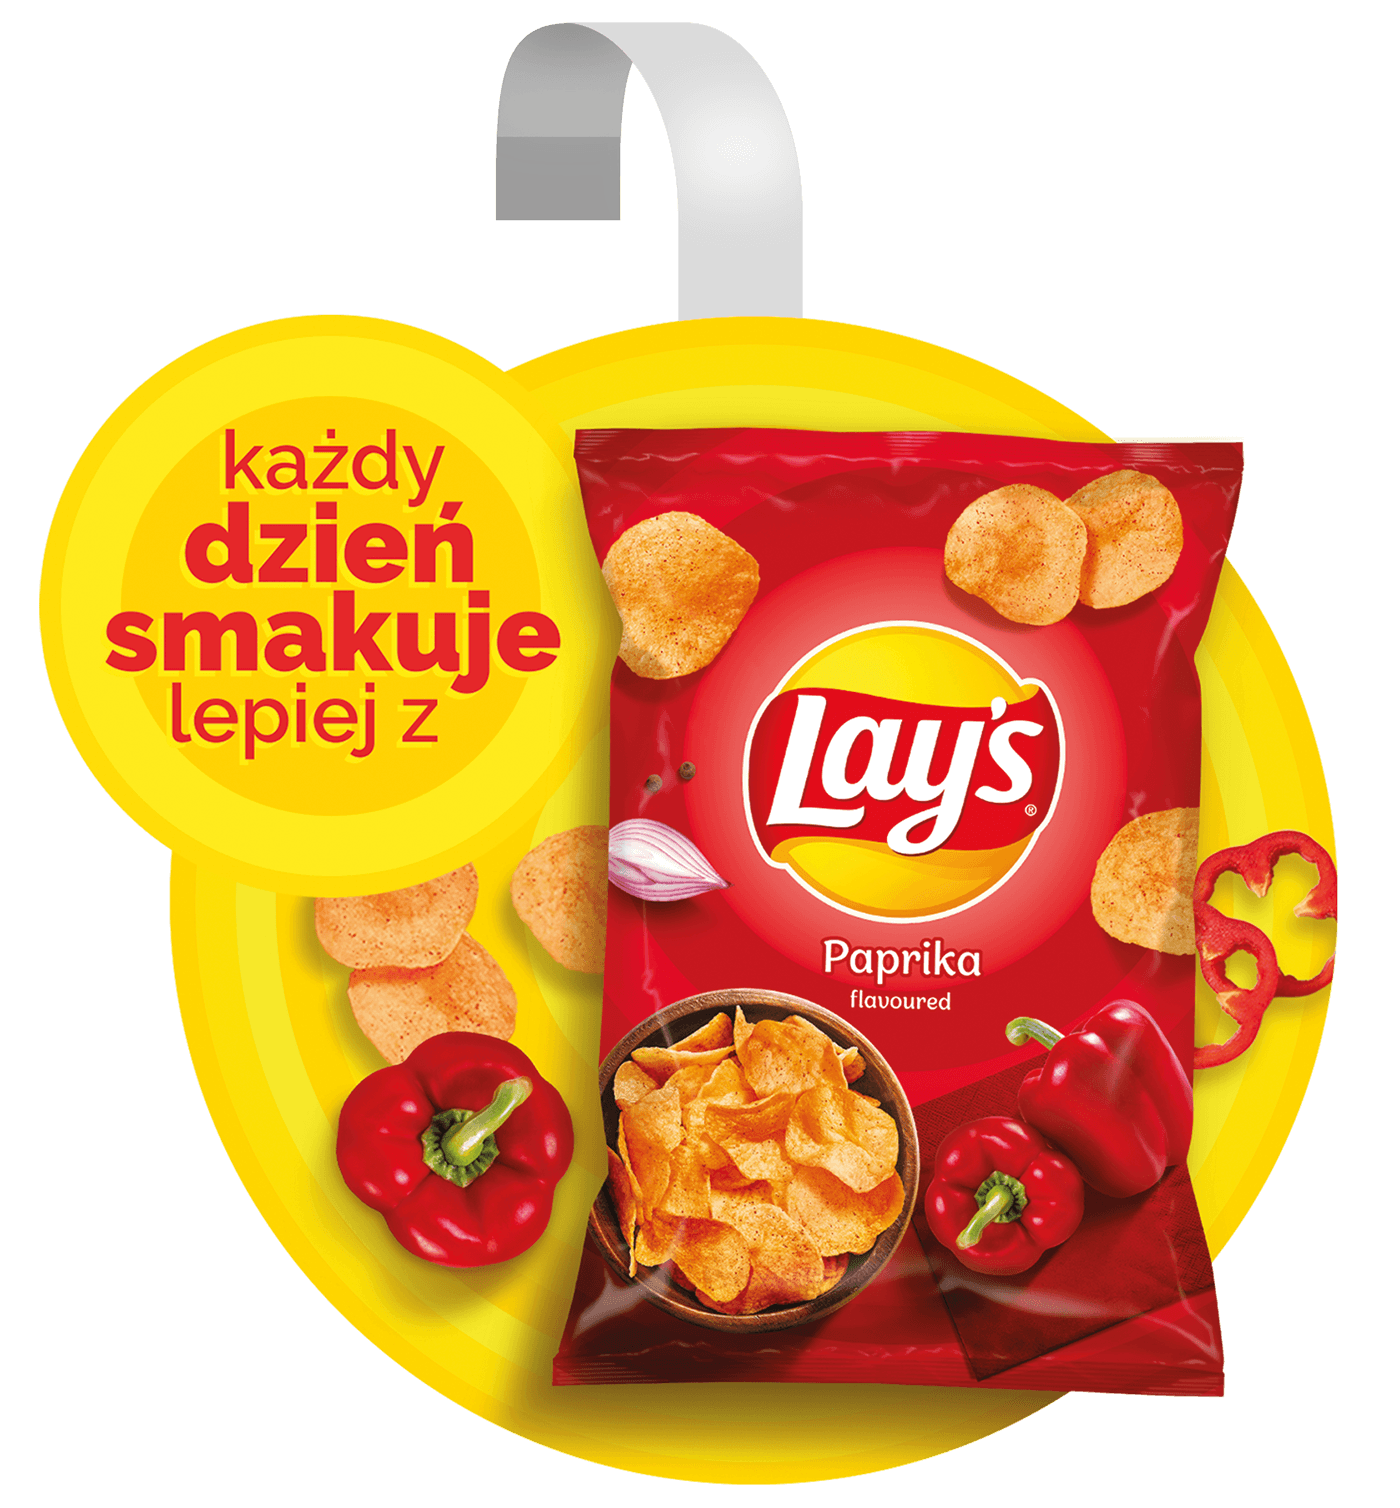 graphic design  Advertising  snacks Food  adwertising Promotion